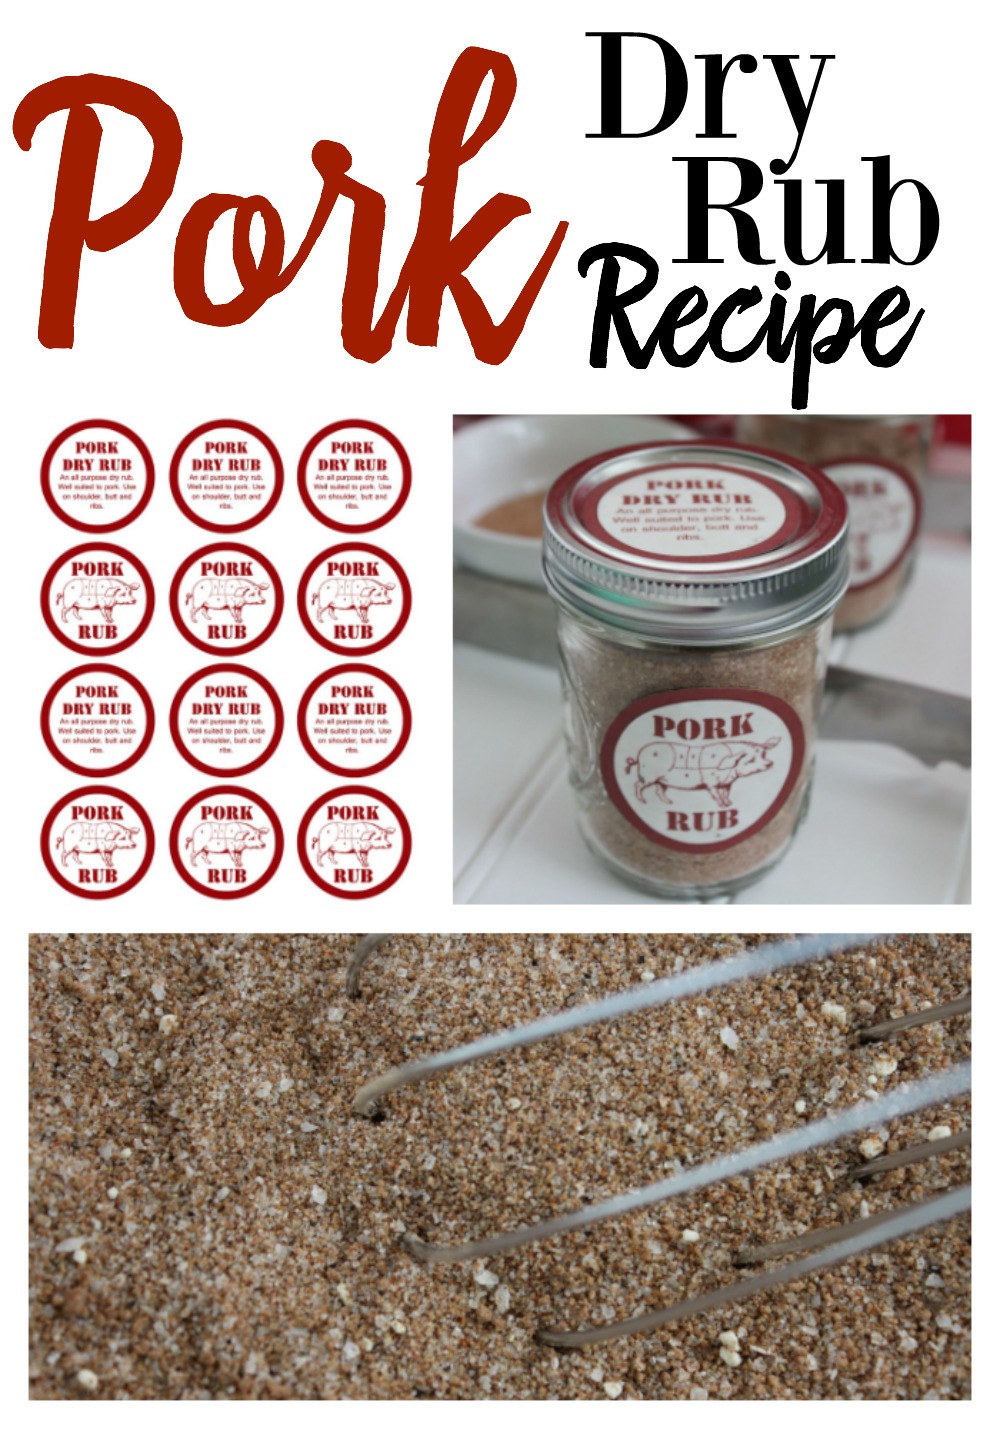 Pork Dry Rub Recipe with Printable Labels